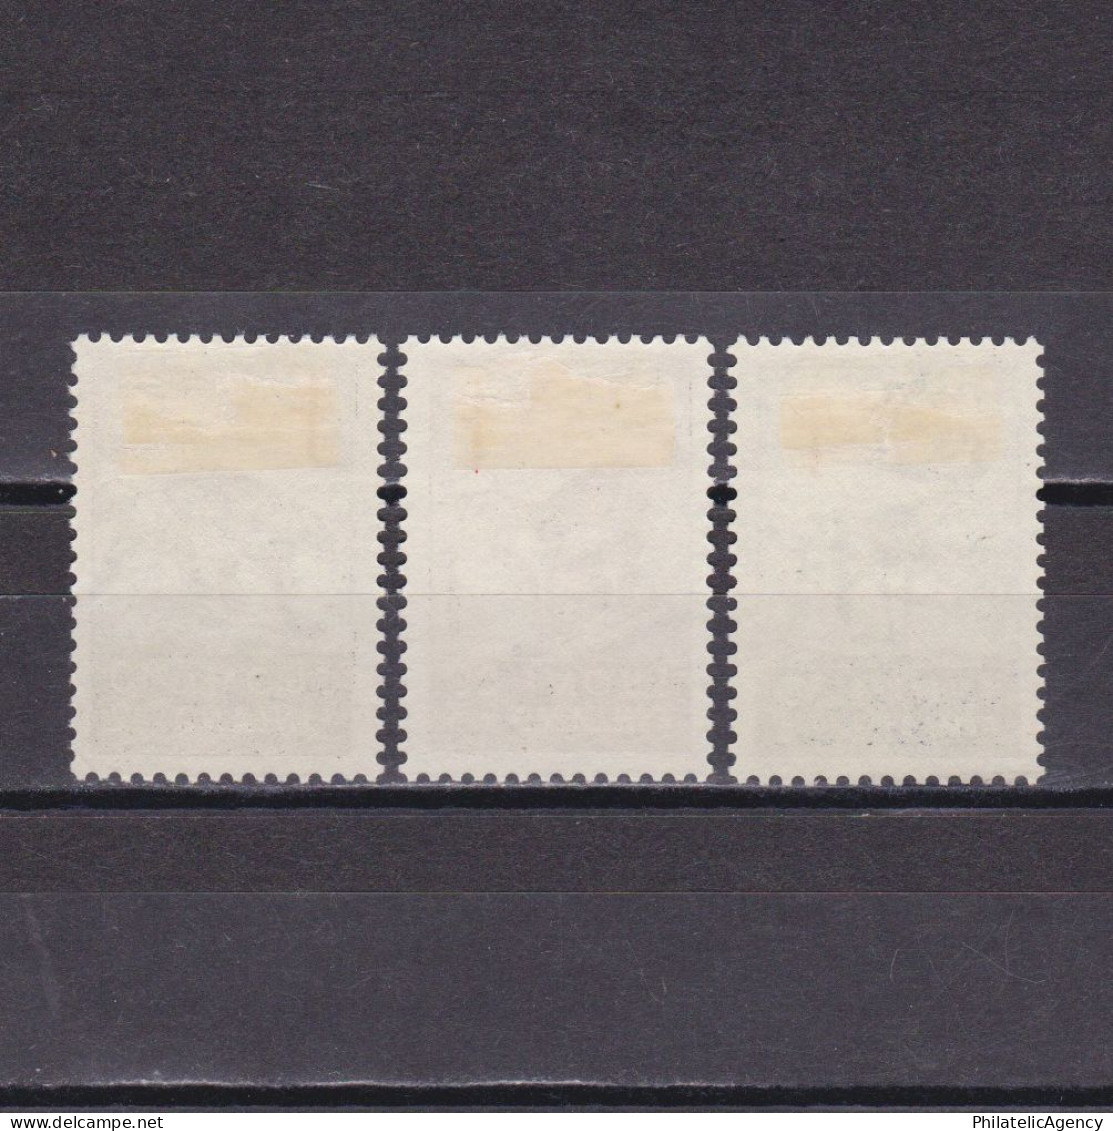 FINLAND 1957, Sc# B142-B144, Semi-Postal, Animals, MH - Ungebraucht